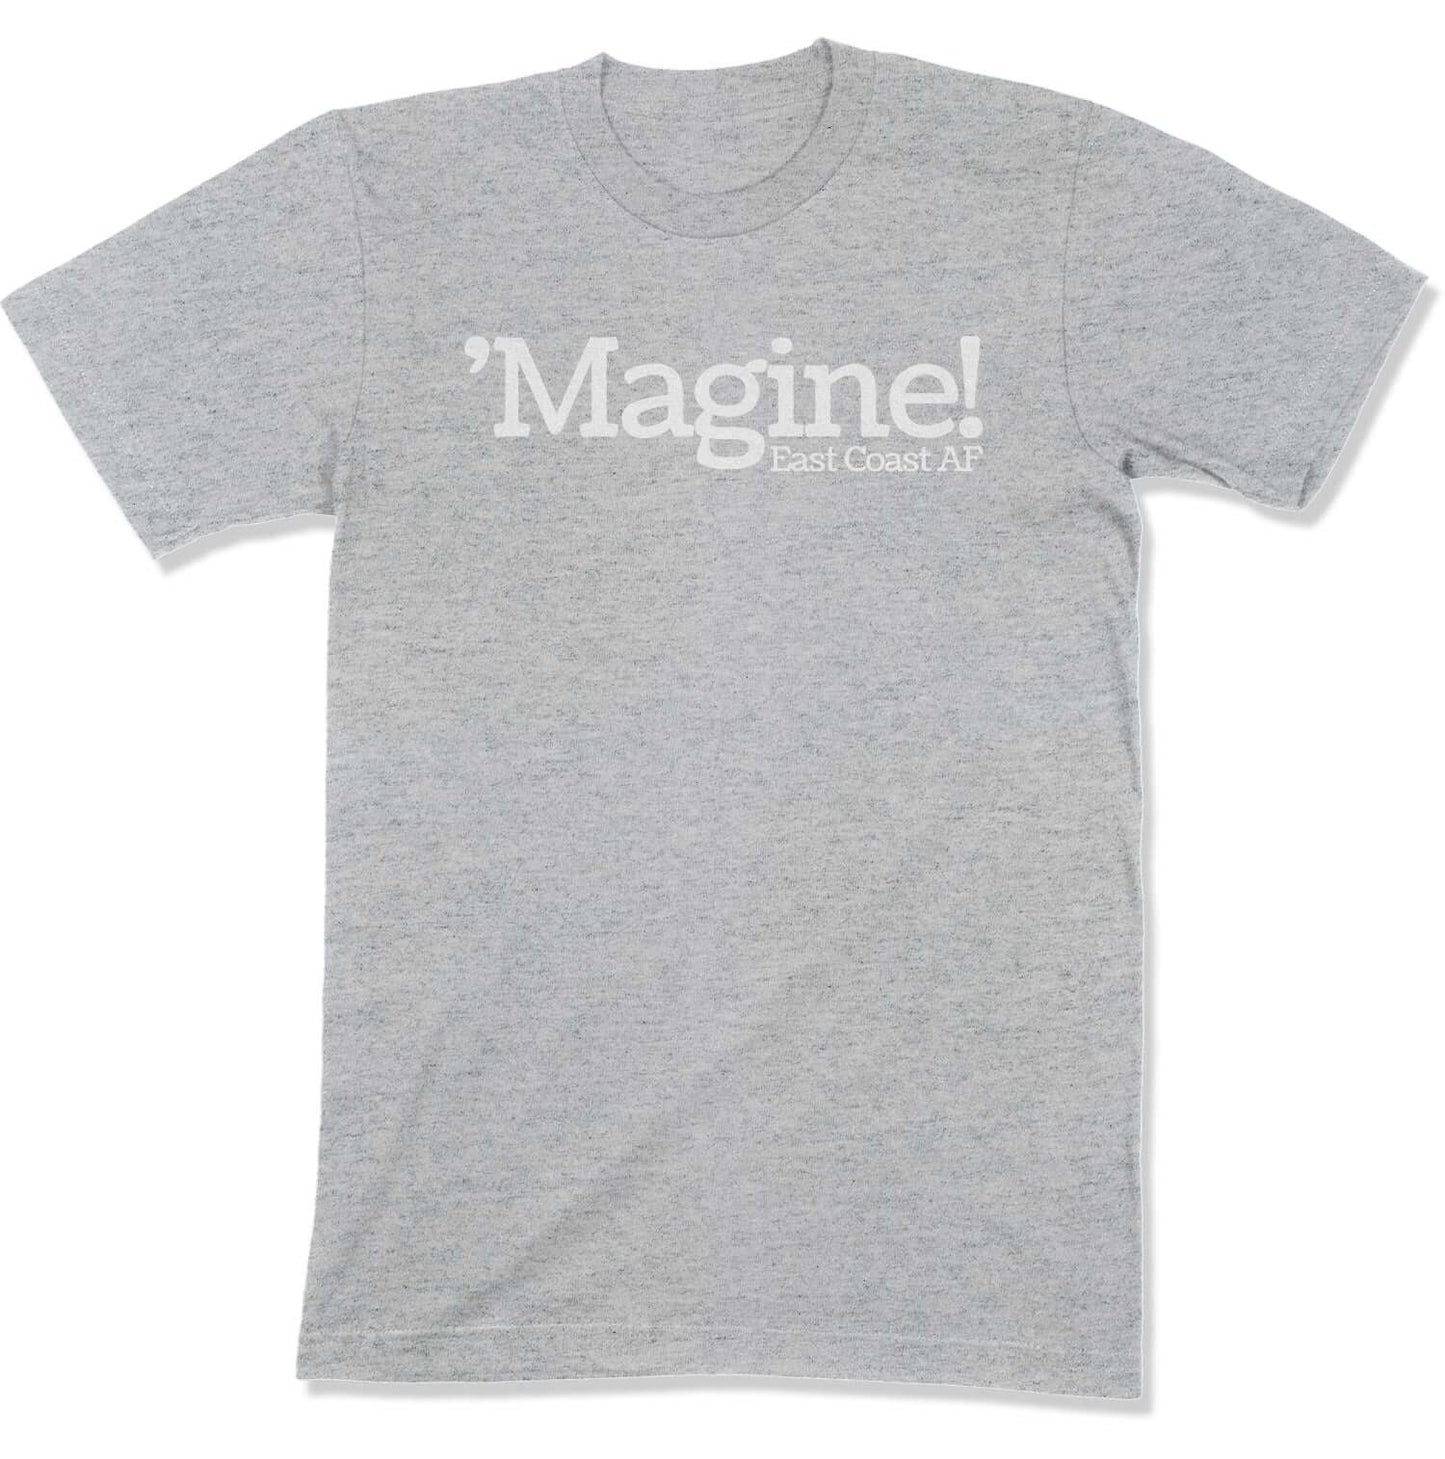 'Magine! Unisex T-Shirt in Color: Athletic Heather - East Coast AF Apparel